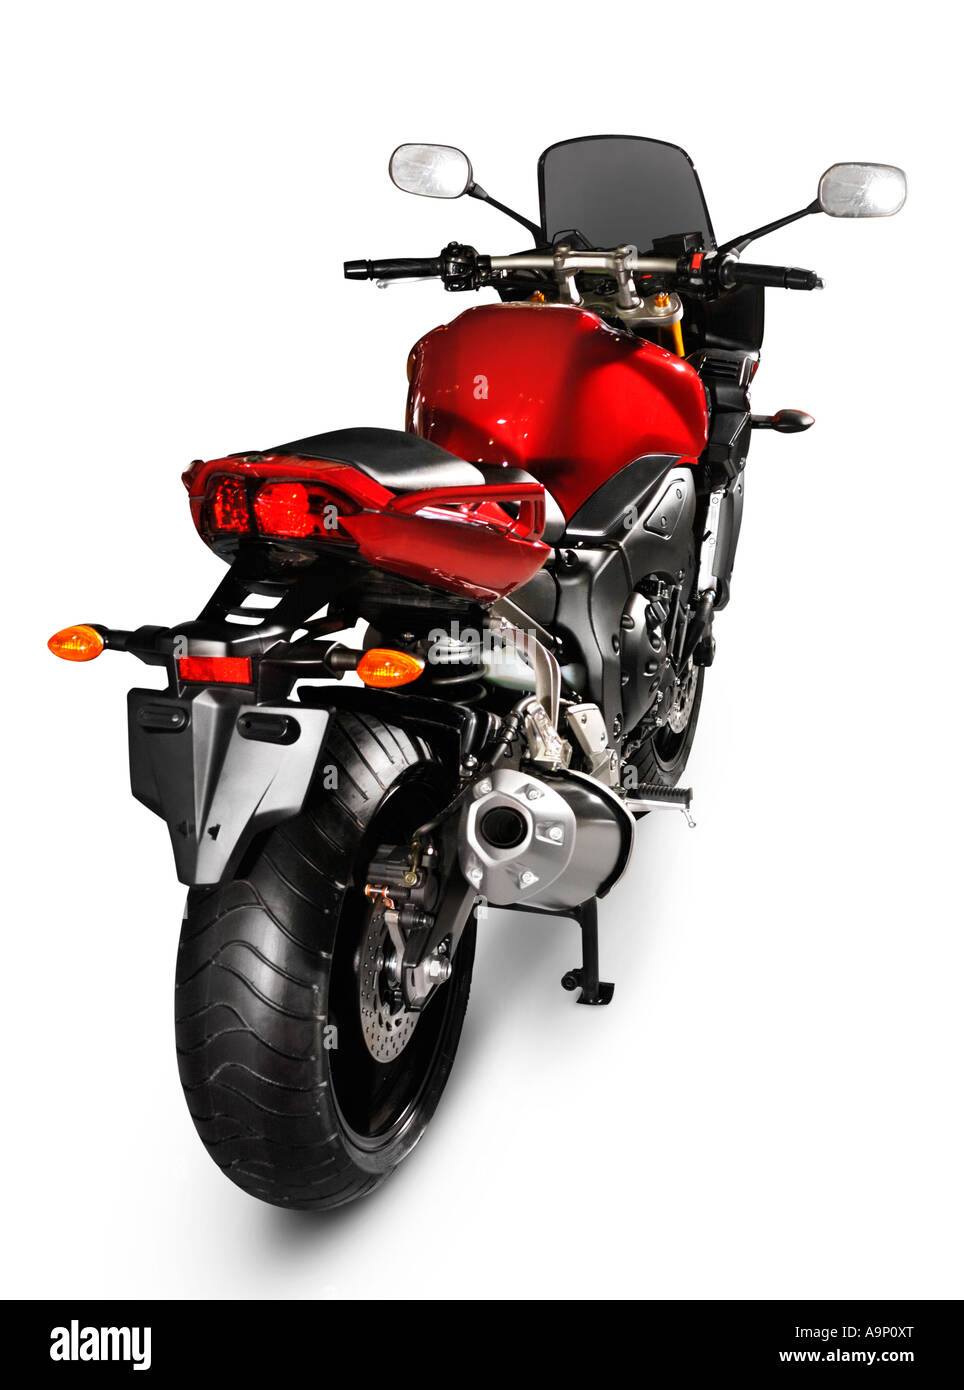 Red Yamaha Fazer 1000 bike motorcycle motorbike Isolated over white cutout  Stock Photo - Alamy